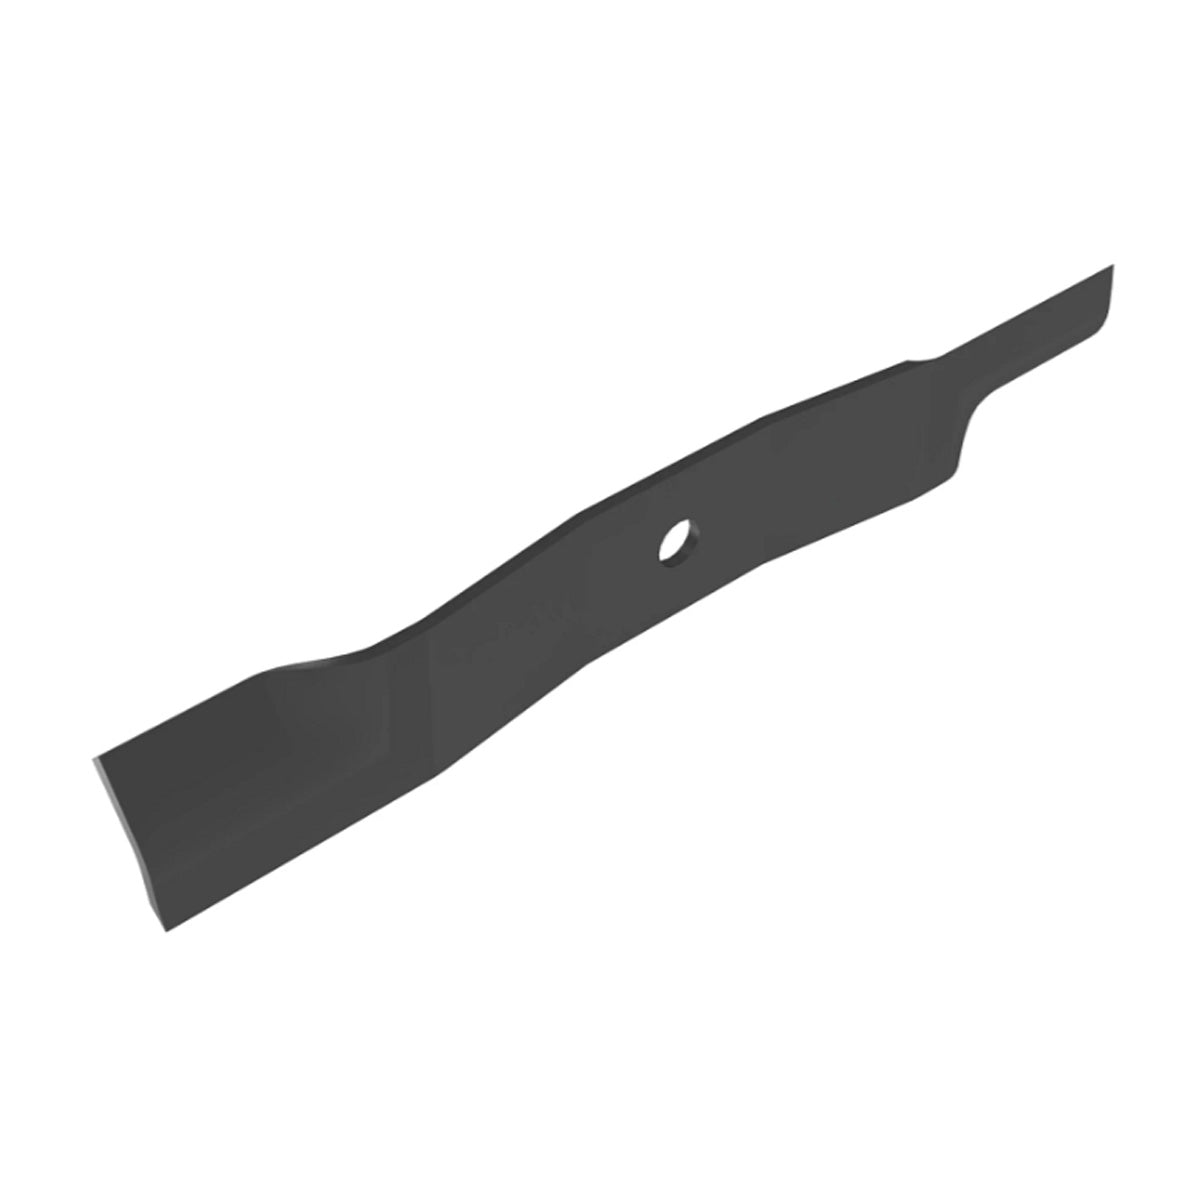 John Deere Mower Blade (High Lift) for Select Models with 60" Deck - TCU15881